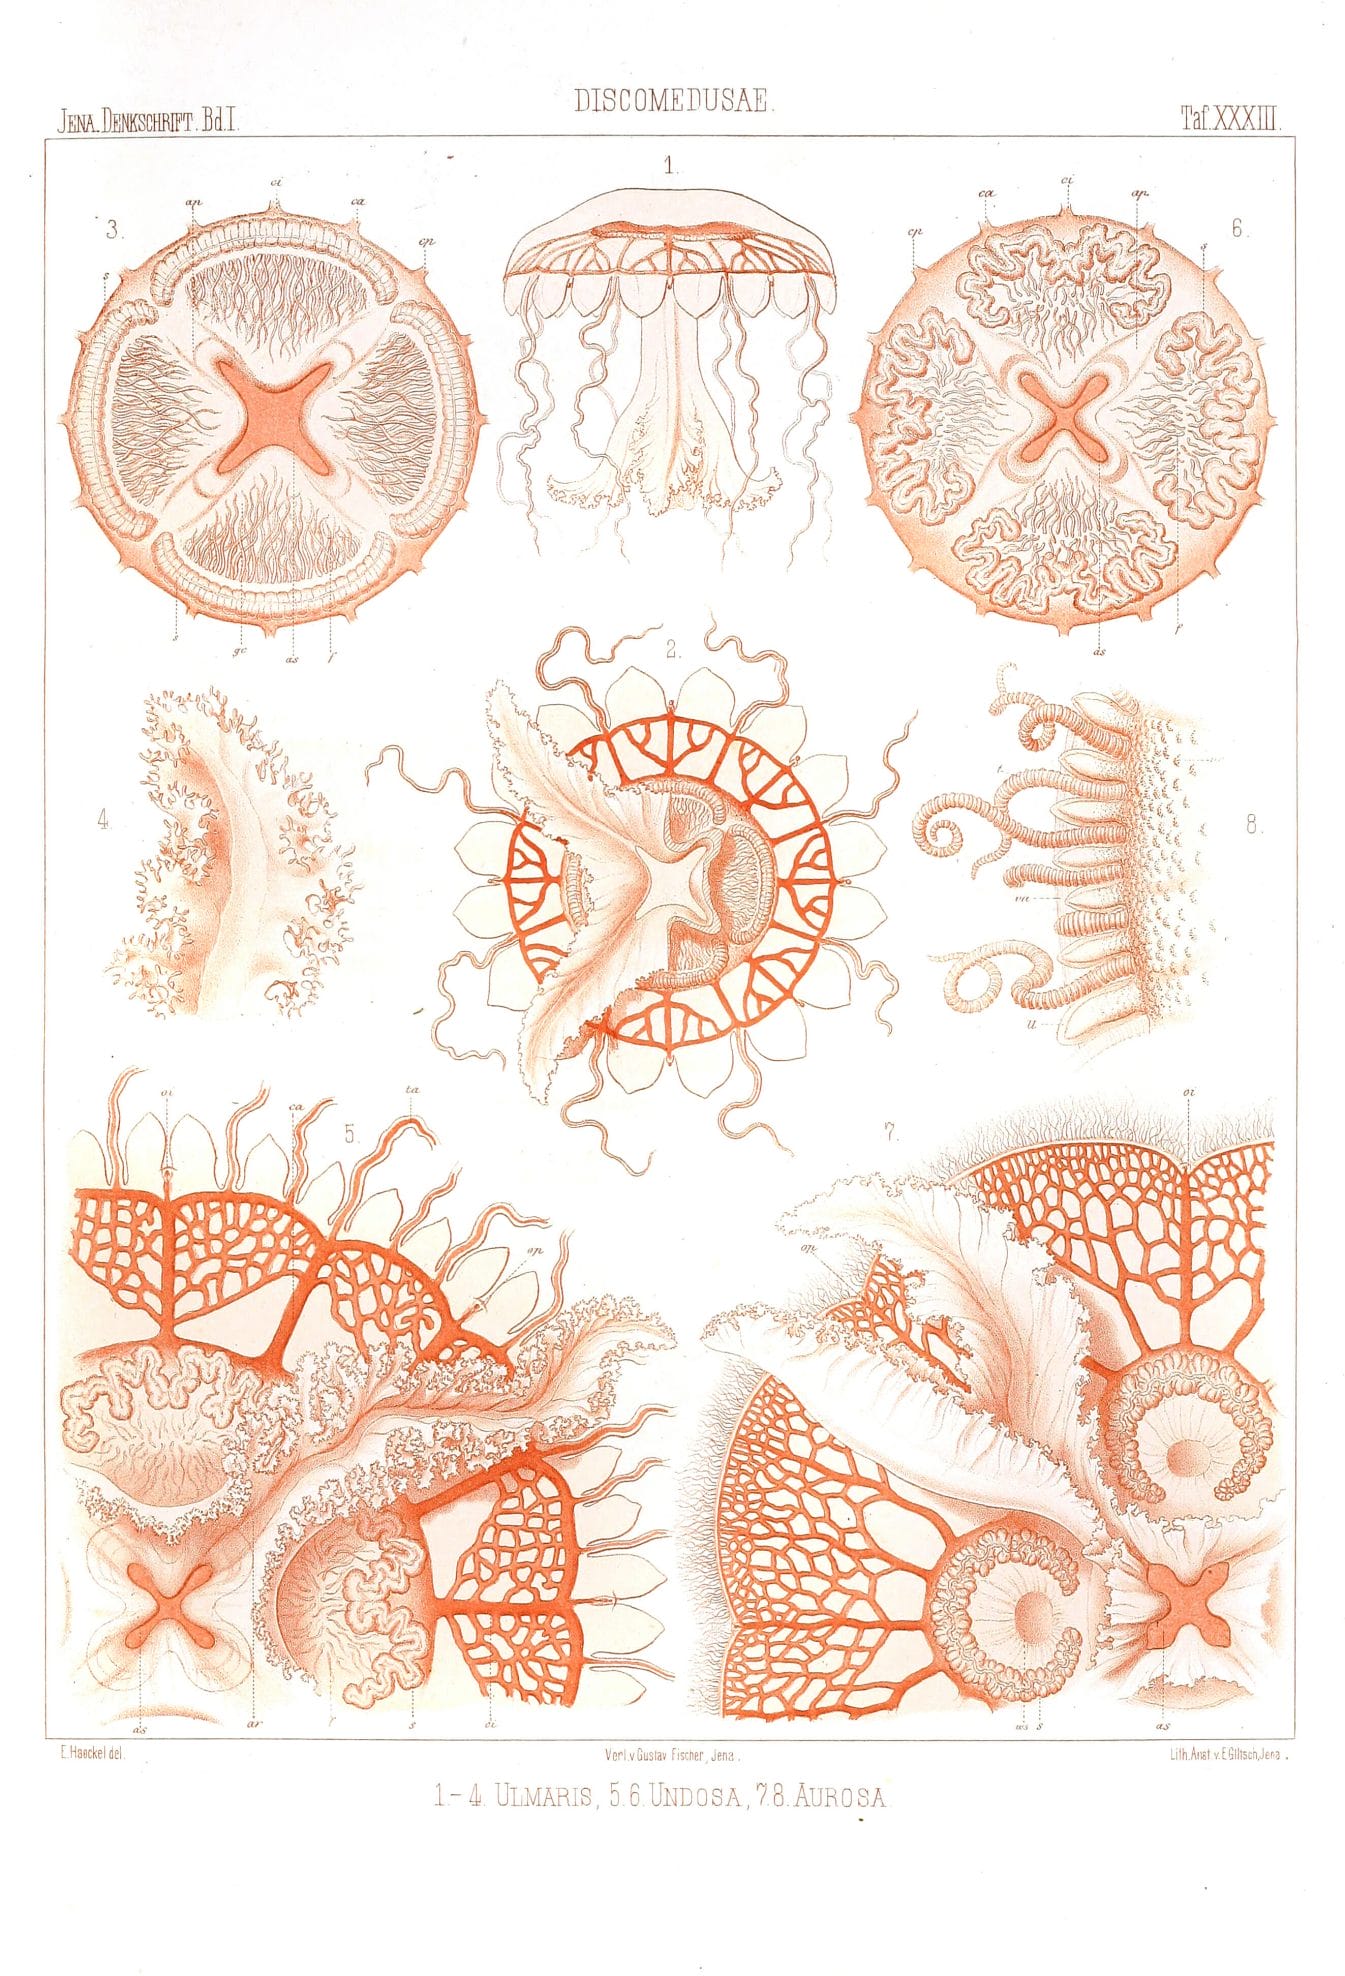 Ulmaris Undosa Aurosa Vintage Jellyfish Illustration